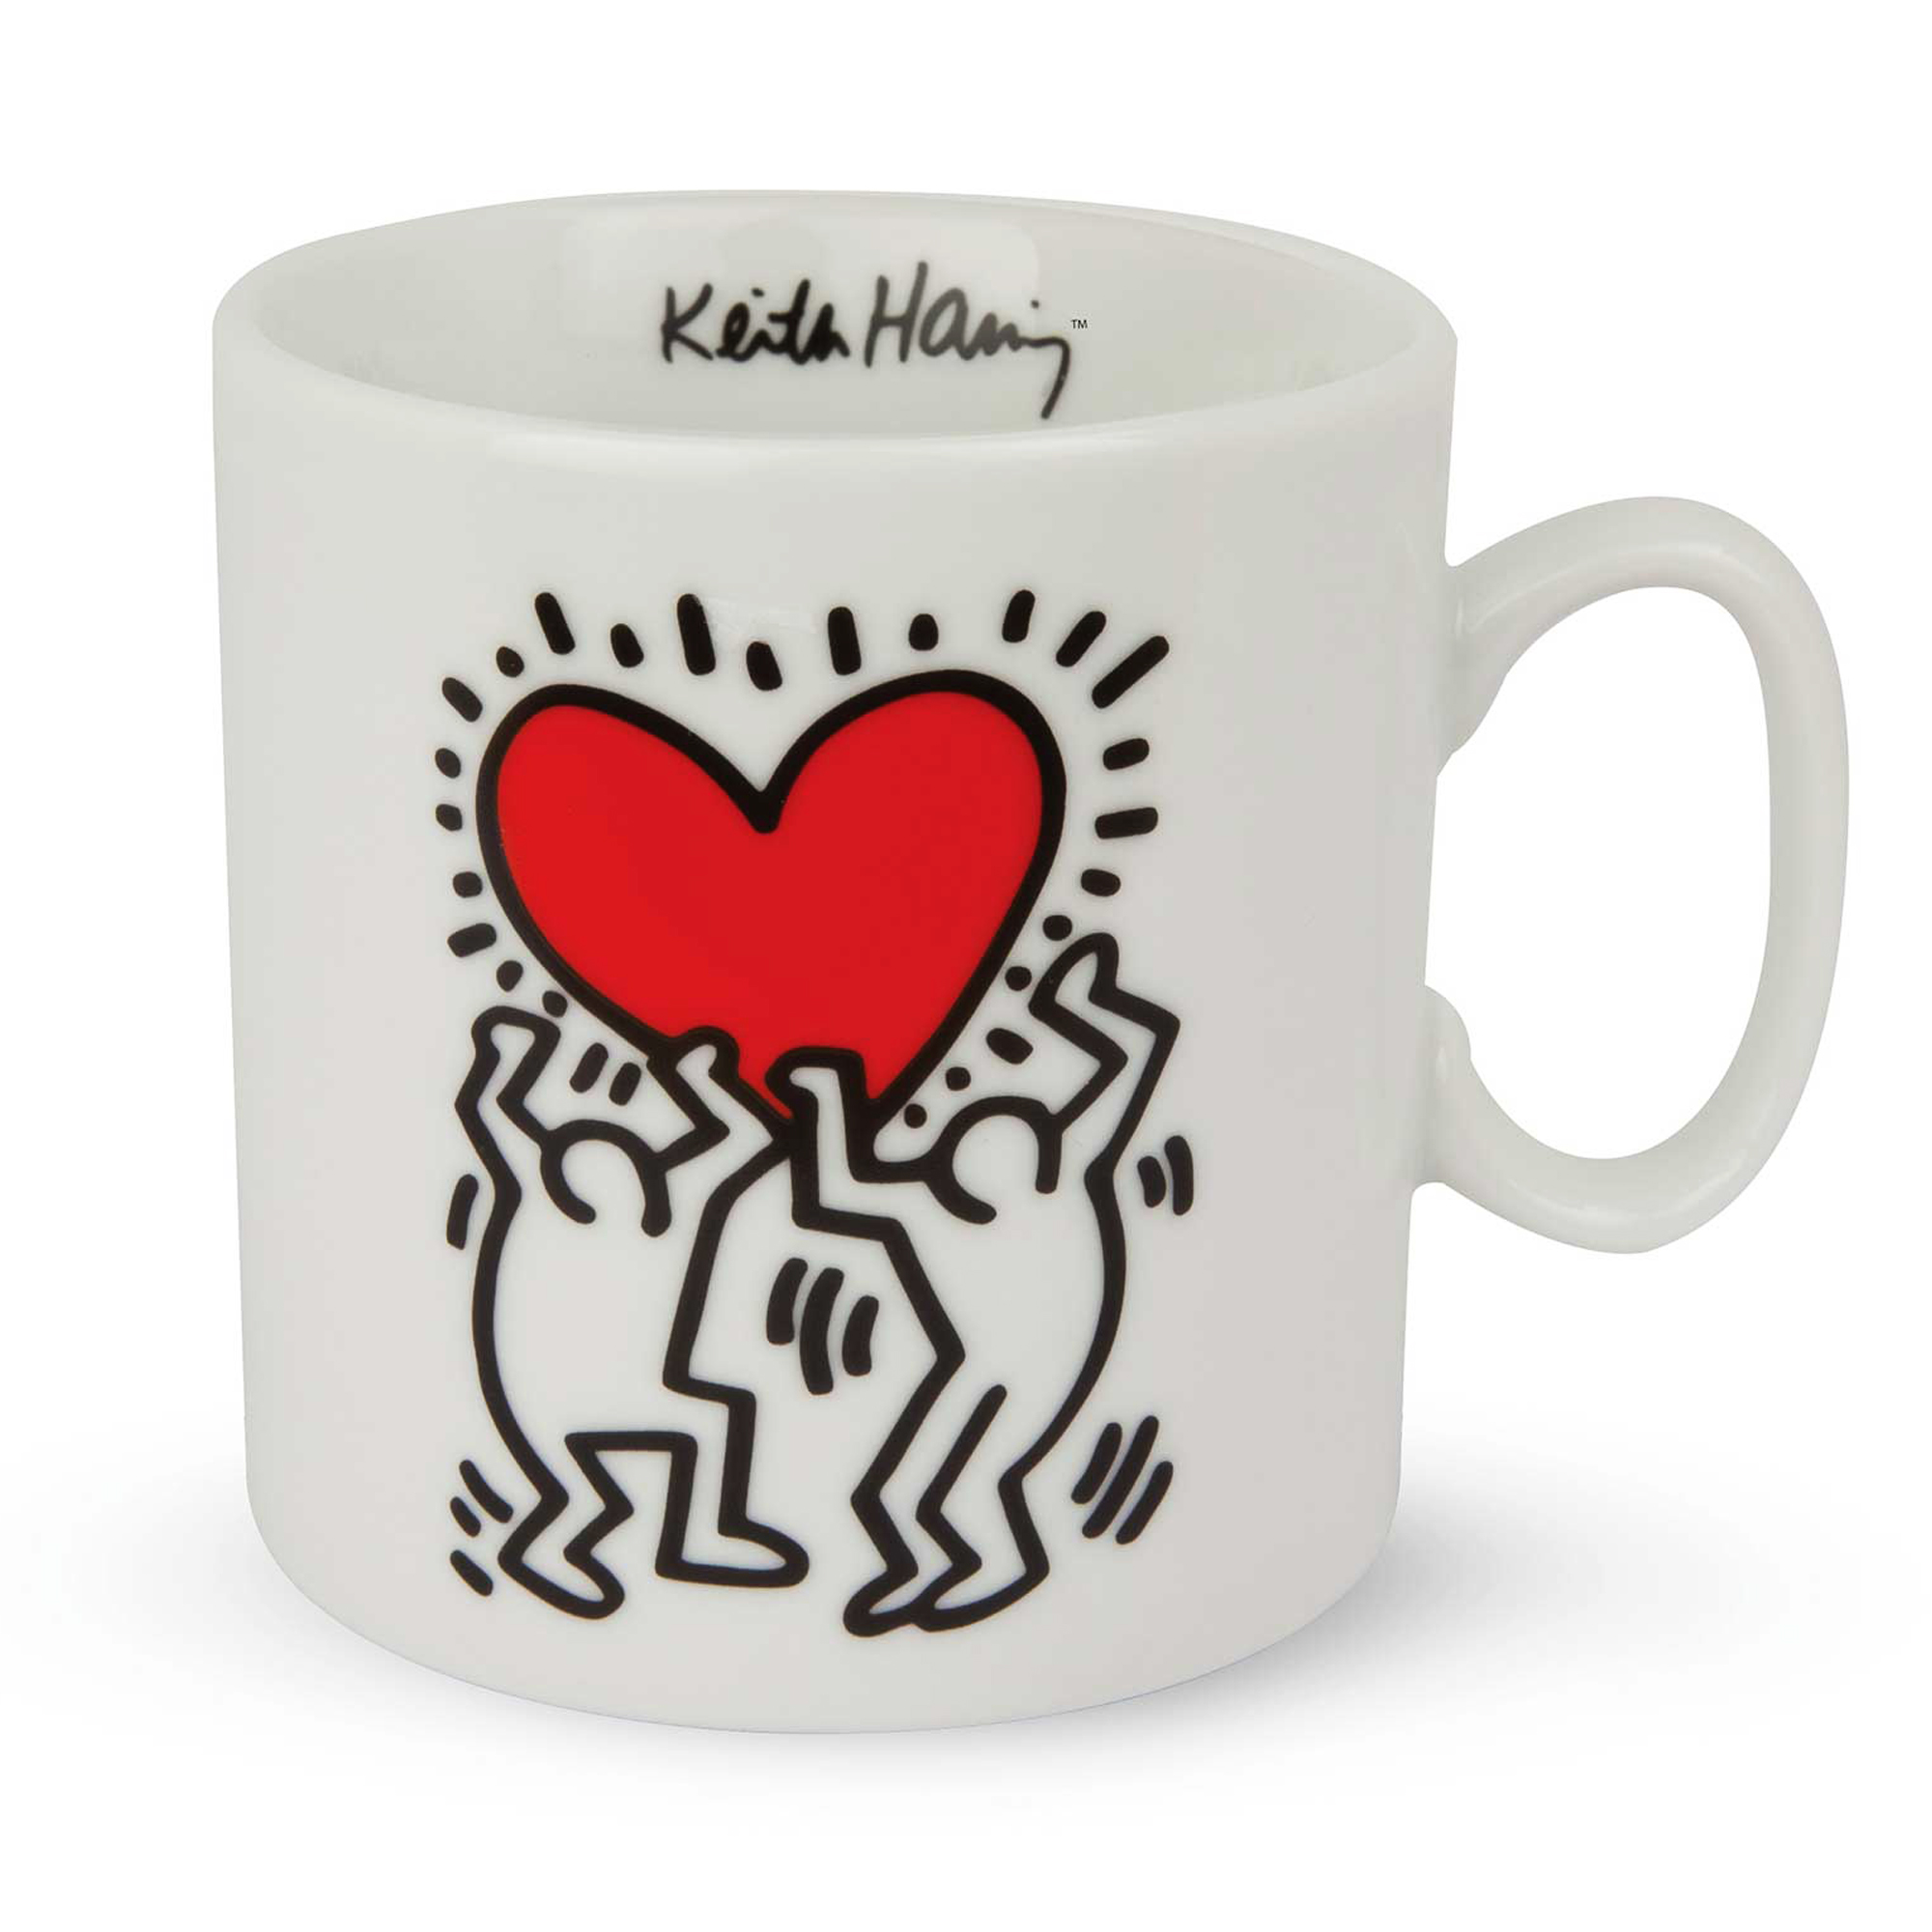 Mug porcelaine \'Keith Haring\' rouge blanc (two dancers, coeur) - 9x8 cm (30 cl) - [R6883]